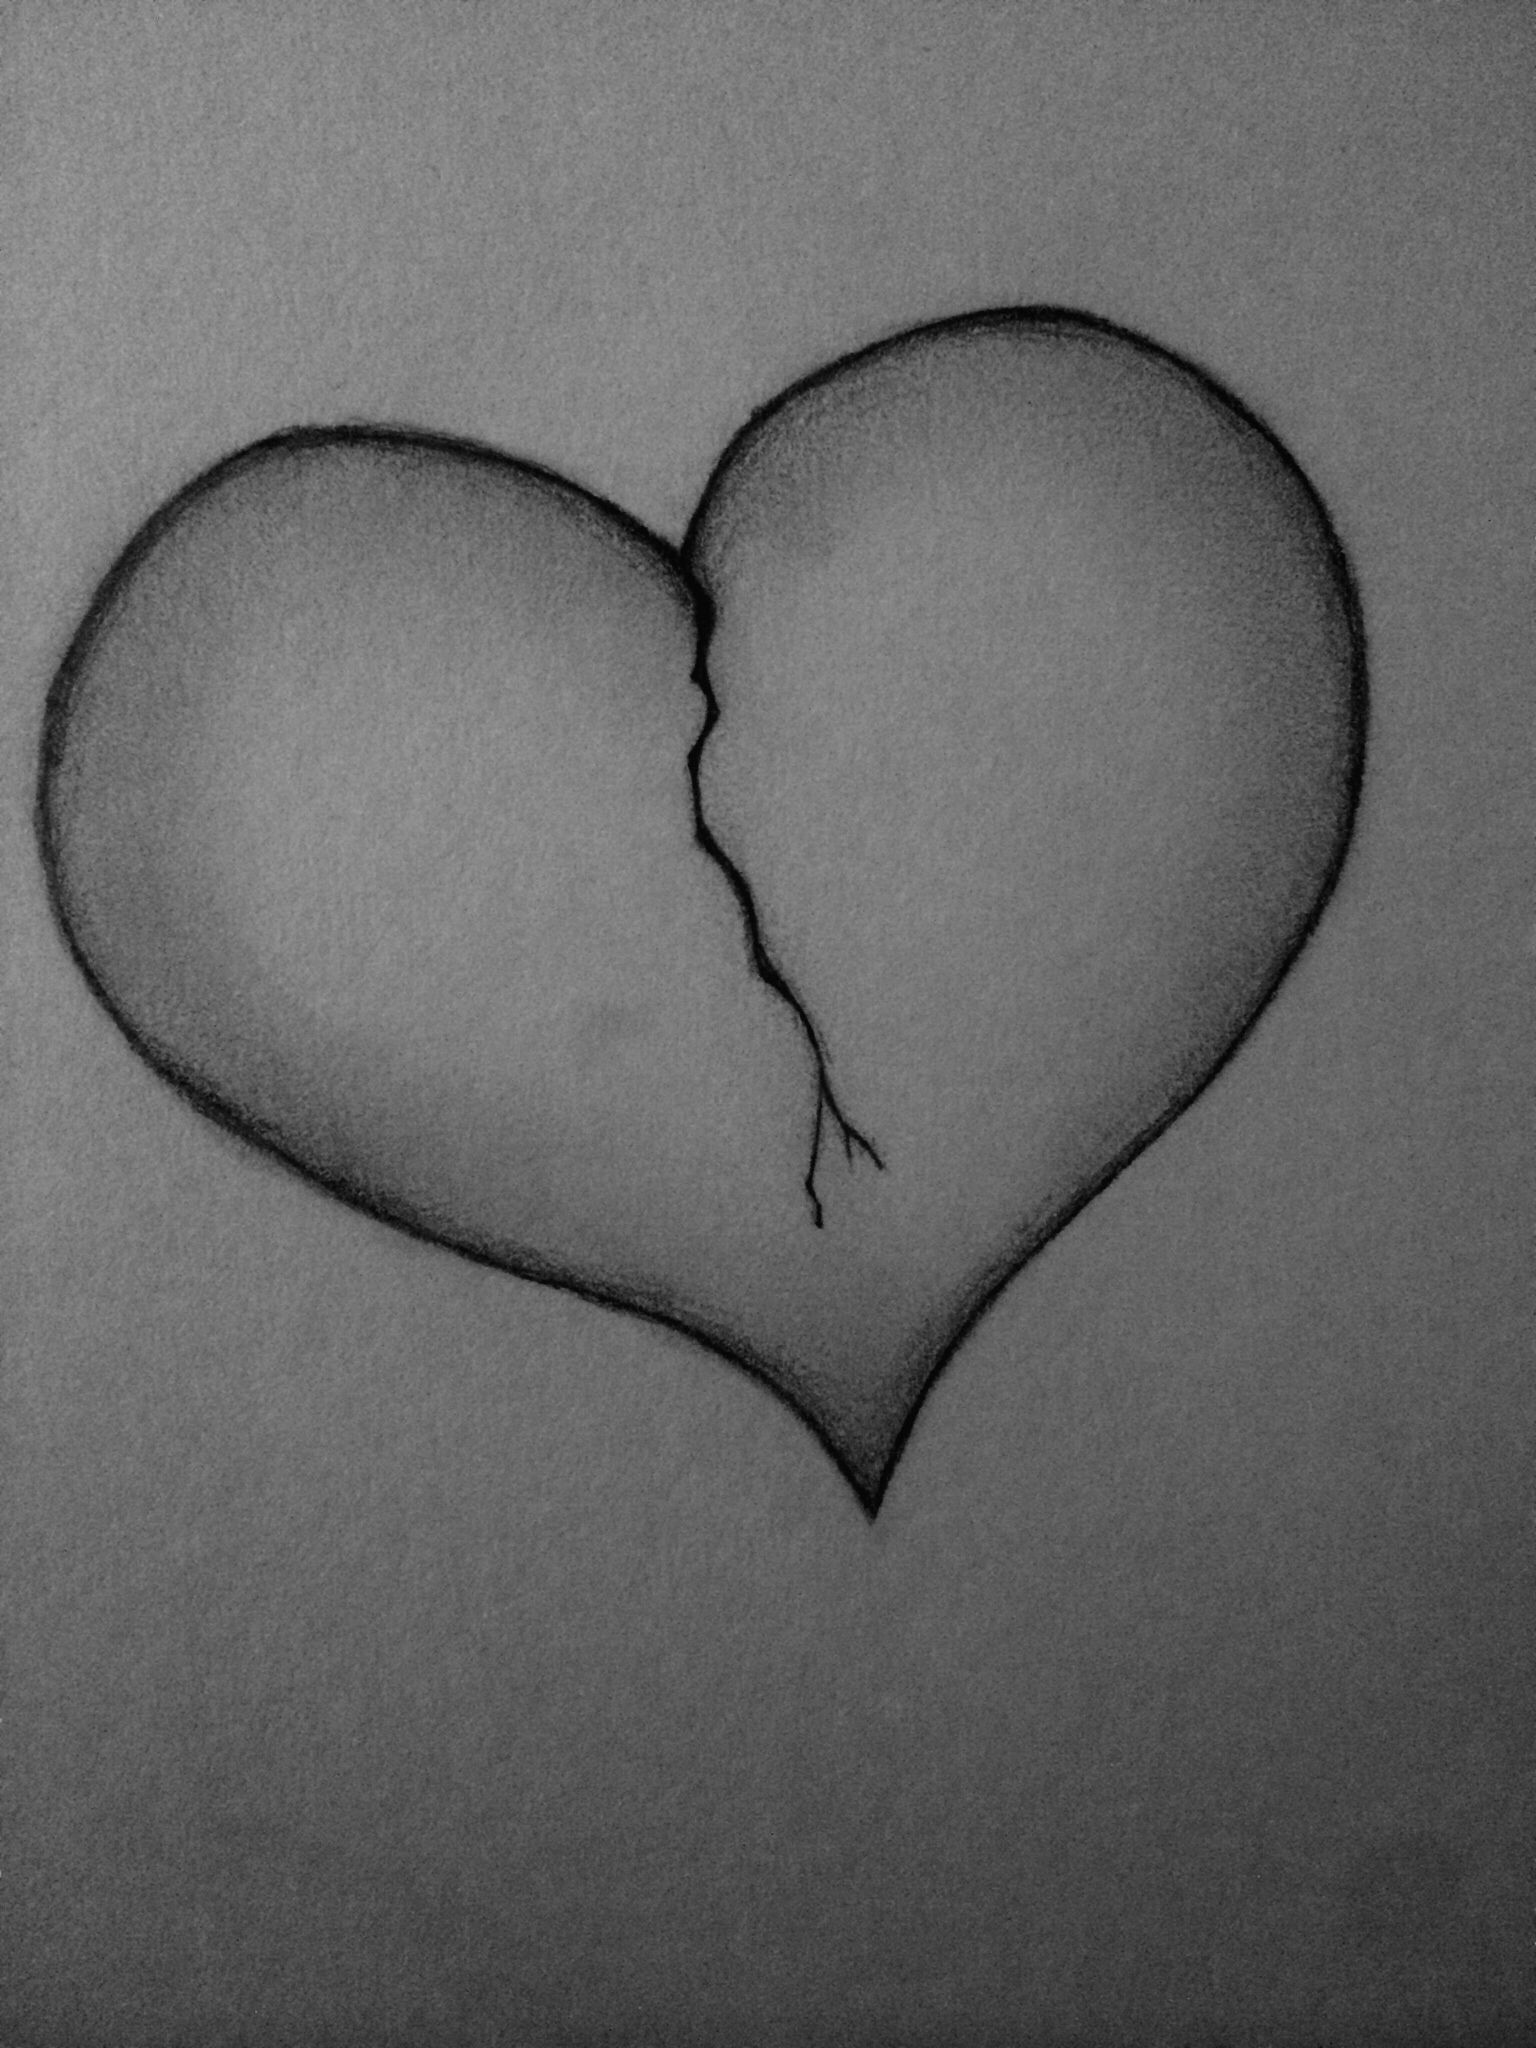 Broken Heart Drawing Pic